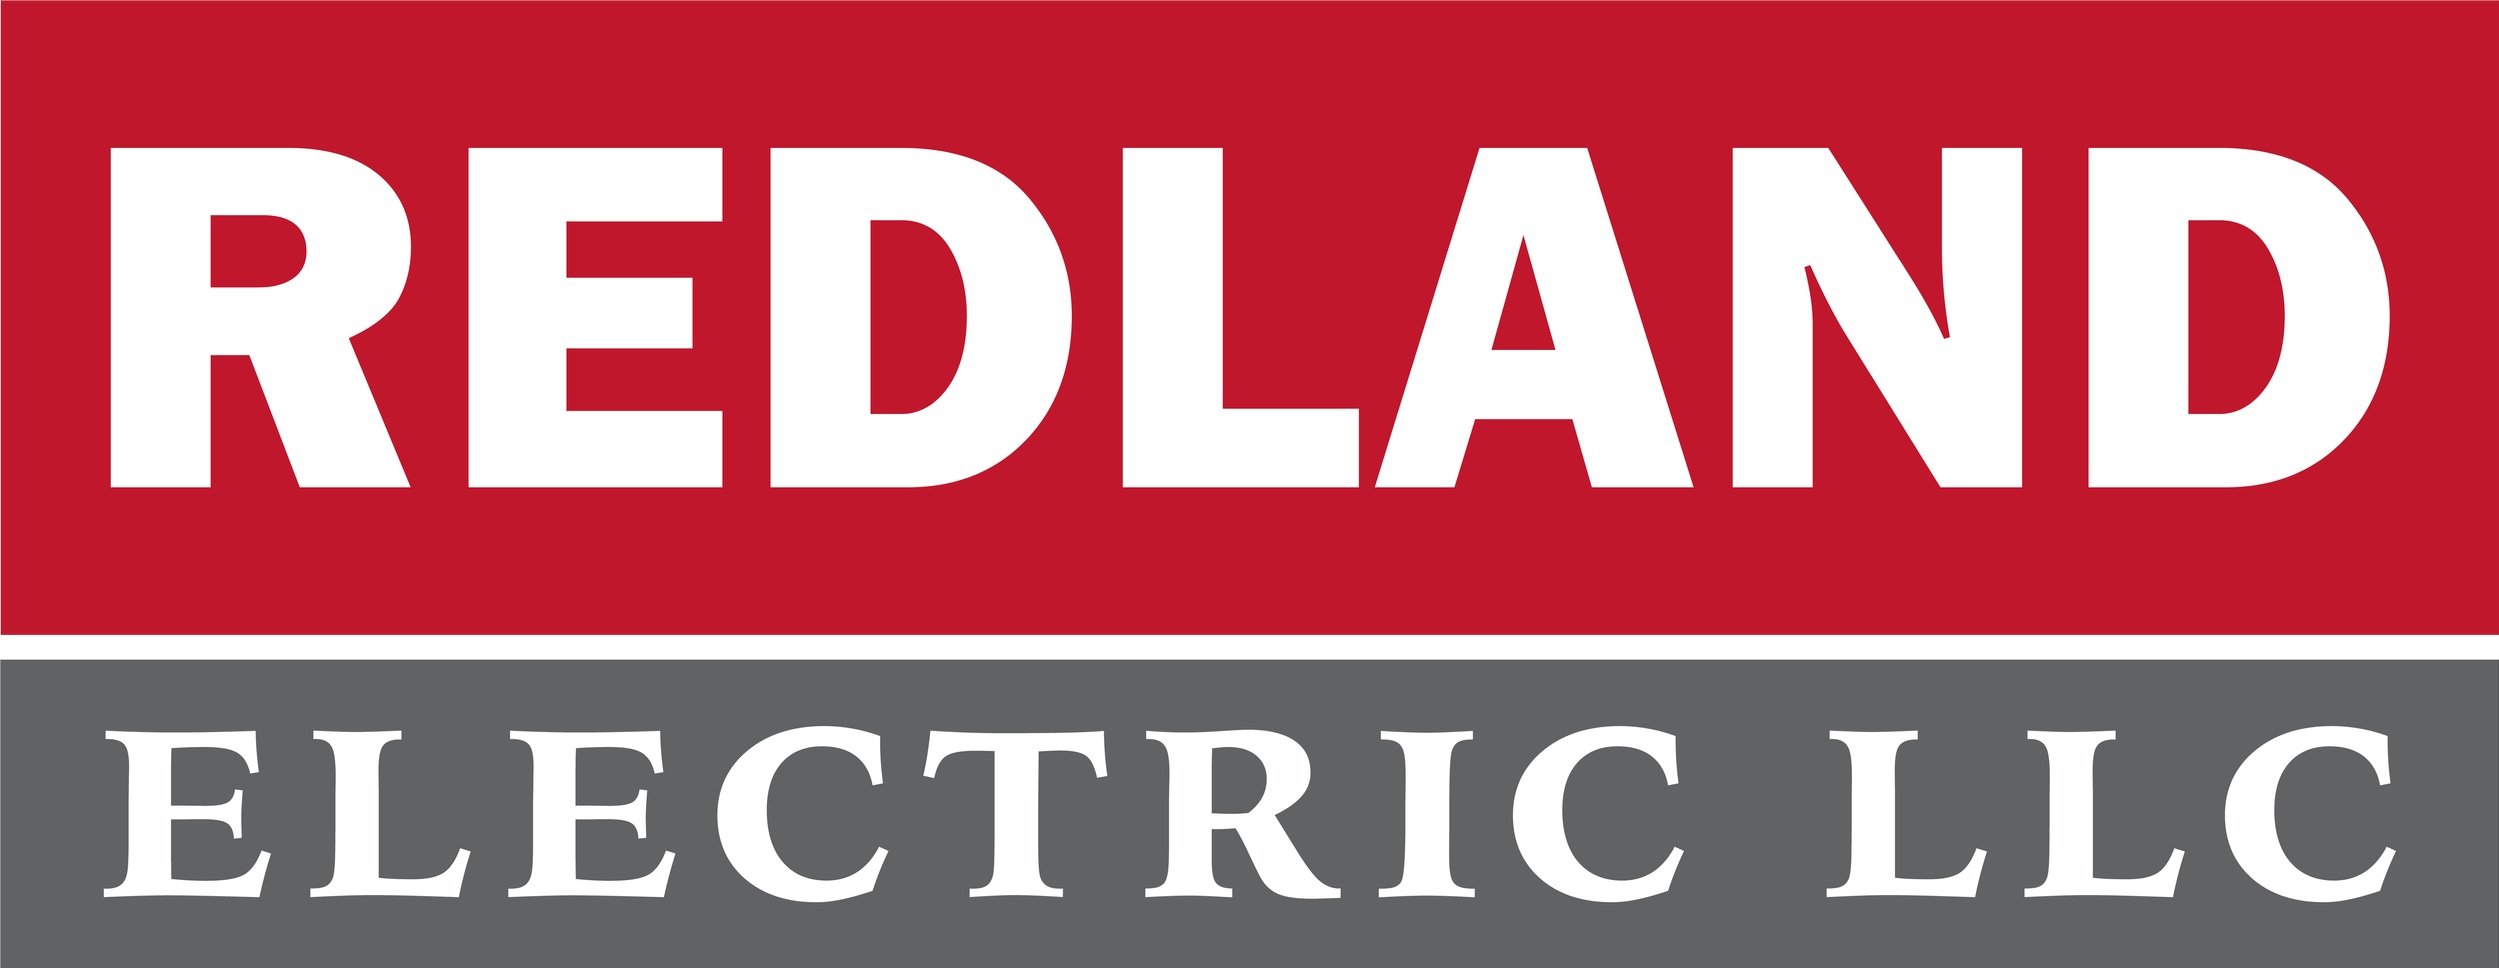 Redland Electric